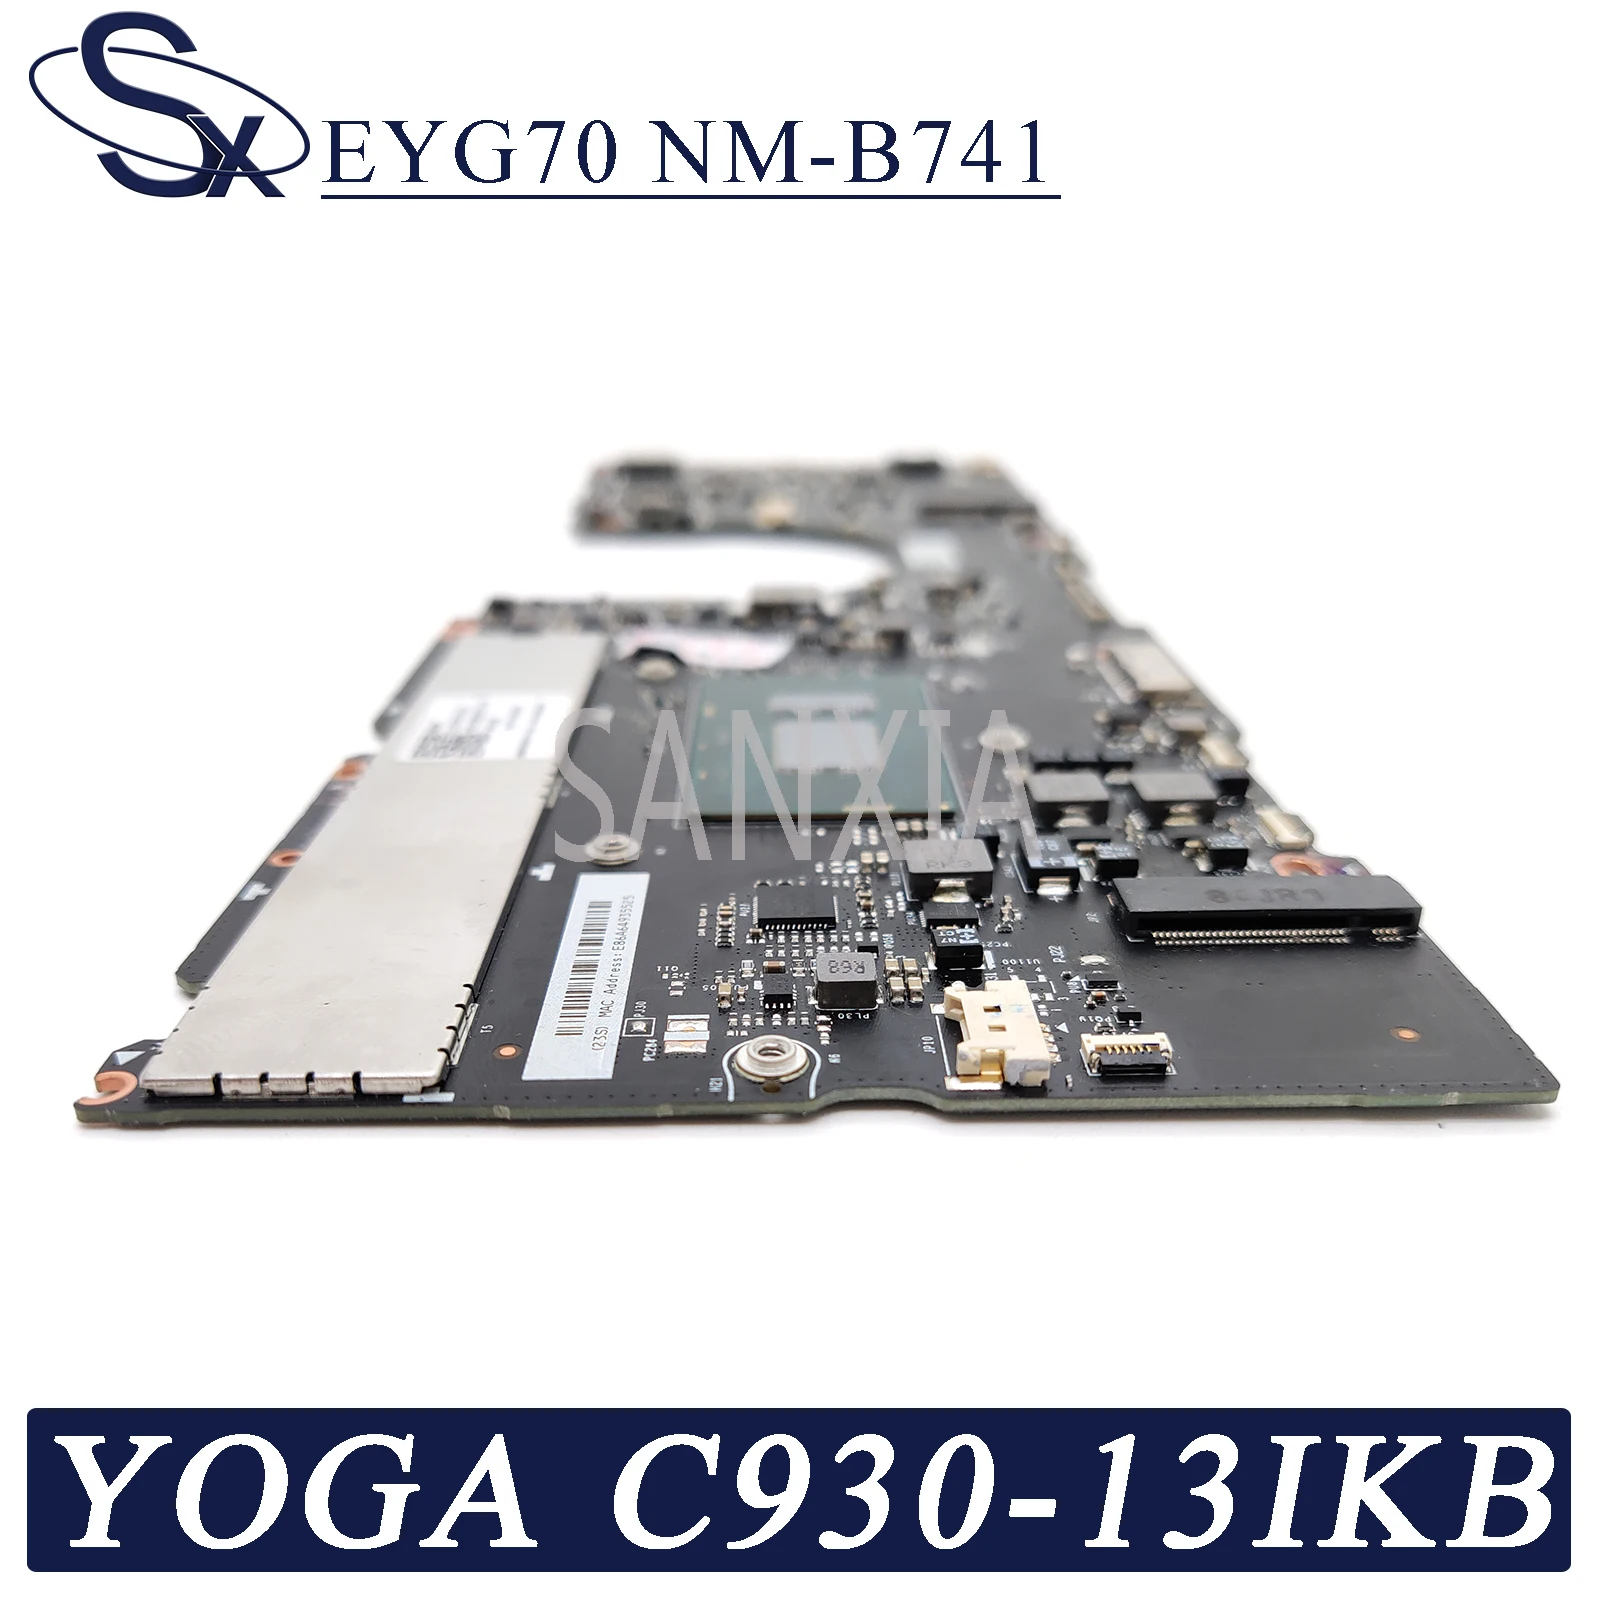 kefu eyg70 nm b741 laptop motherboard for lenovo yoga c930 13ikb original mainboard 8gb ram i7 8550u cpu free global shipping